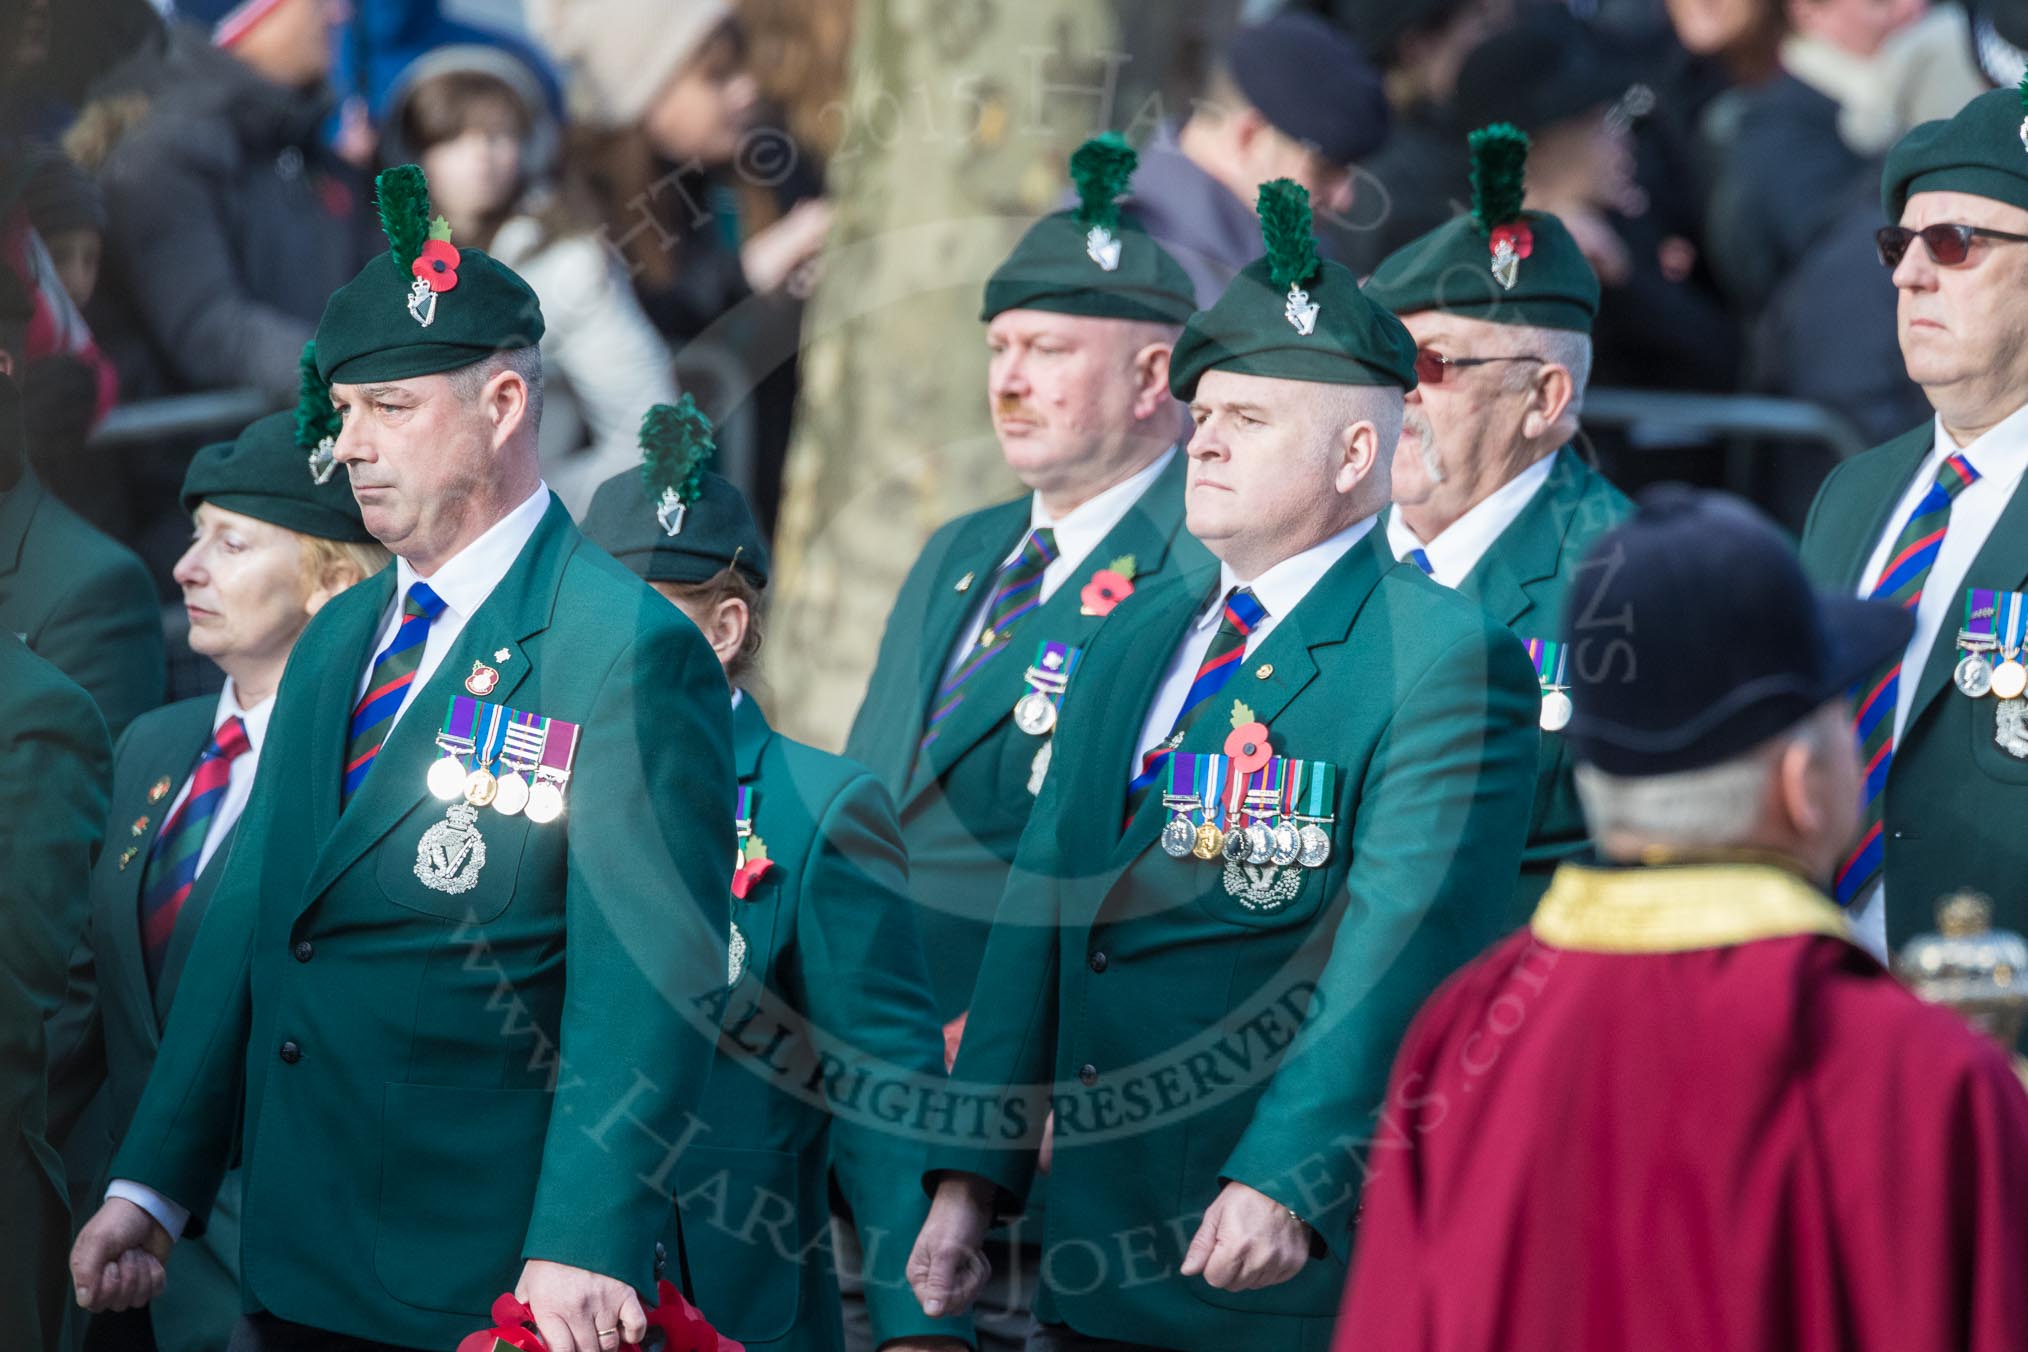 A24 Regimental Association of the Royal Irish Regiment